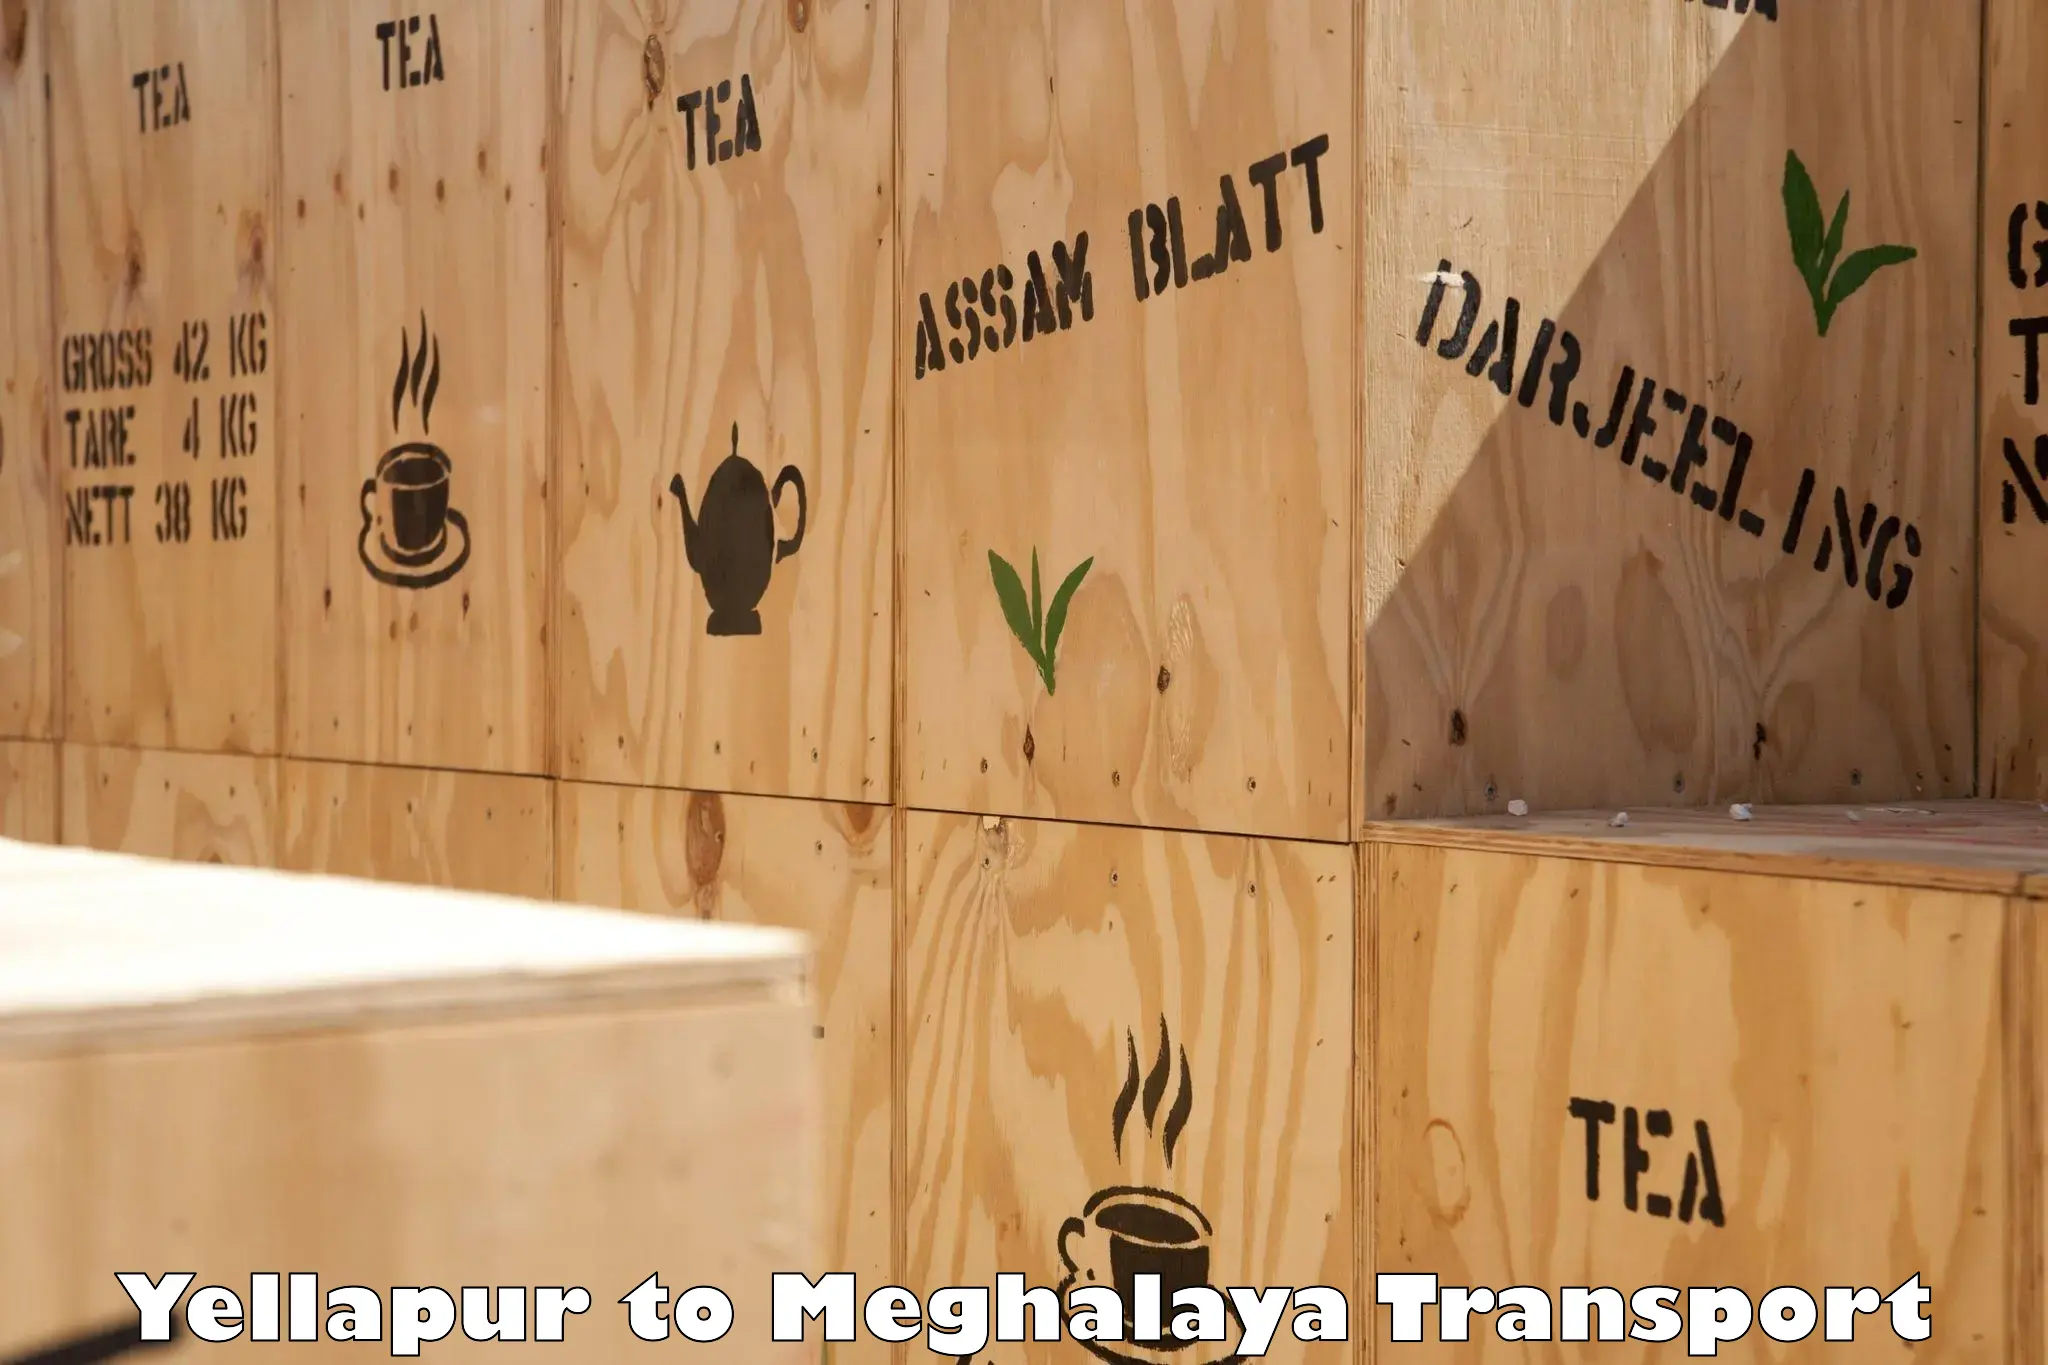 Truck transport companies in India Yellapur to Cherrapunji